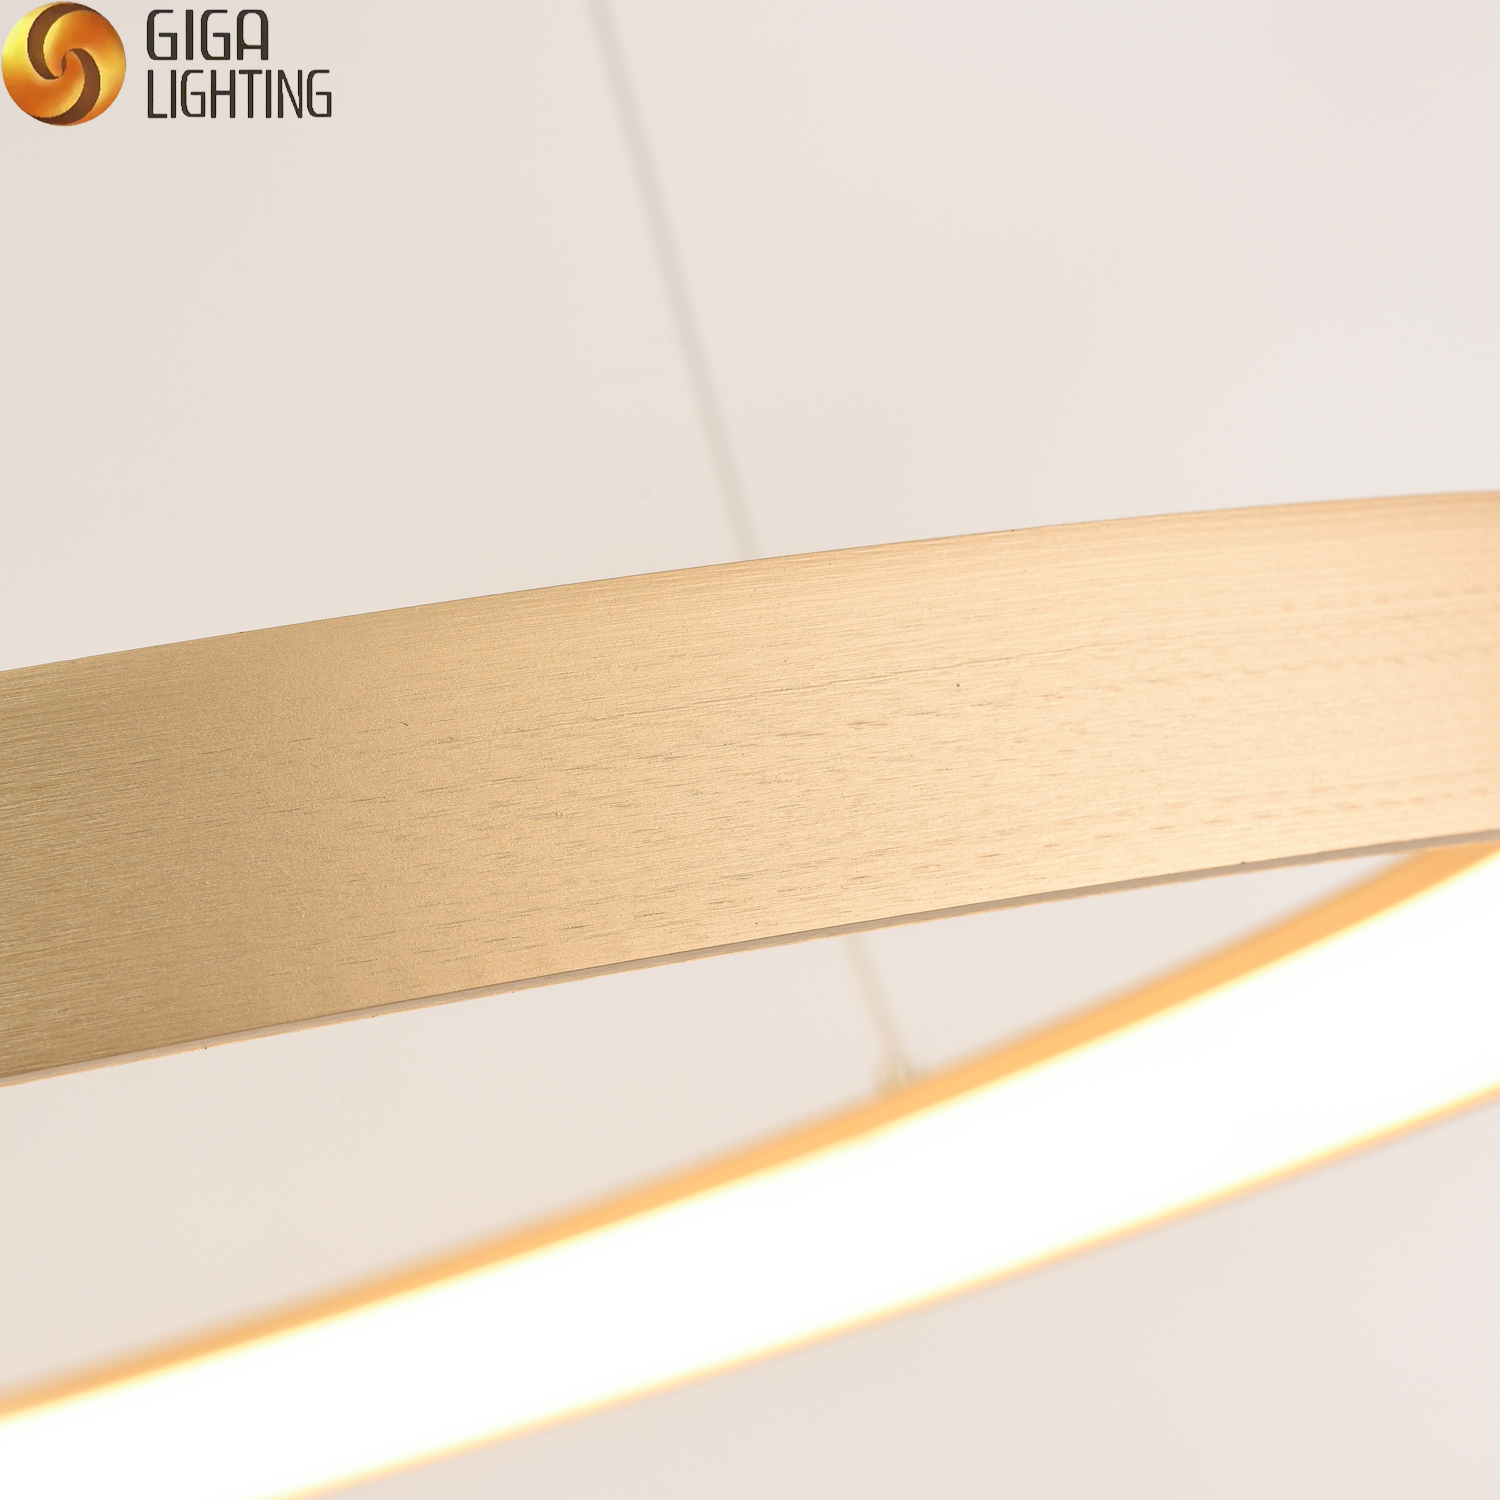 85-265V CE flicker free triangle ring LED pendant lighting fixture